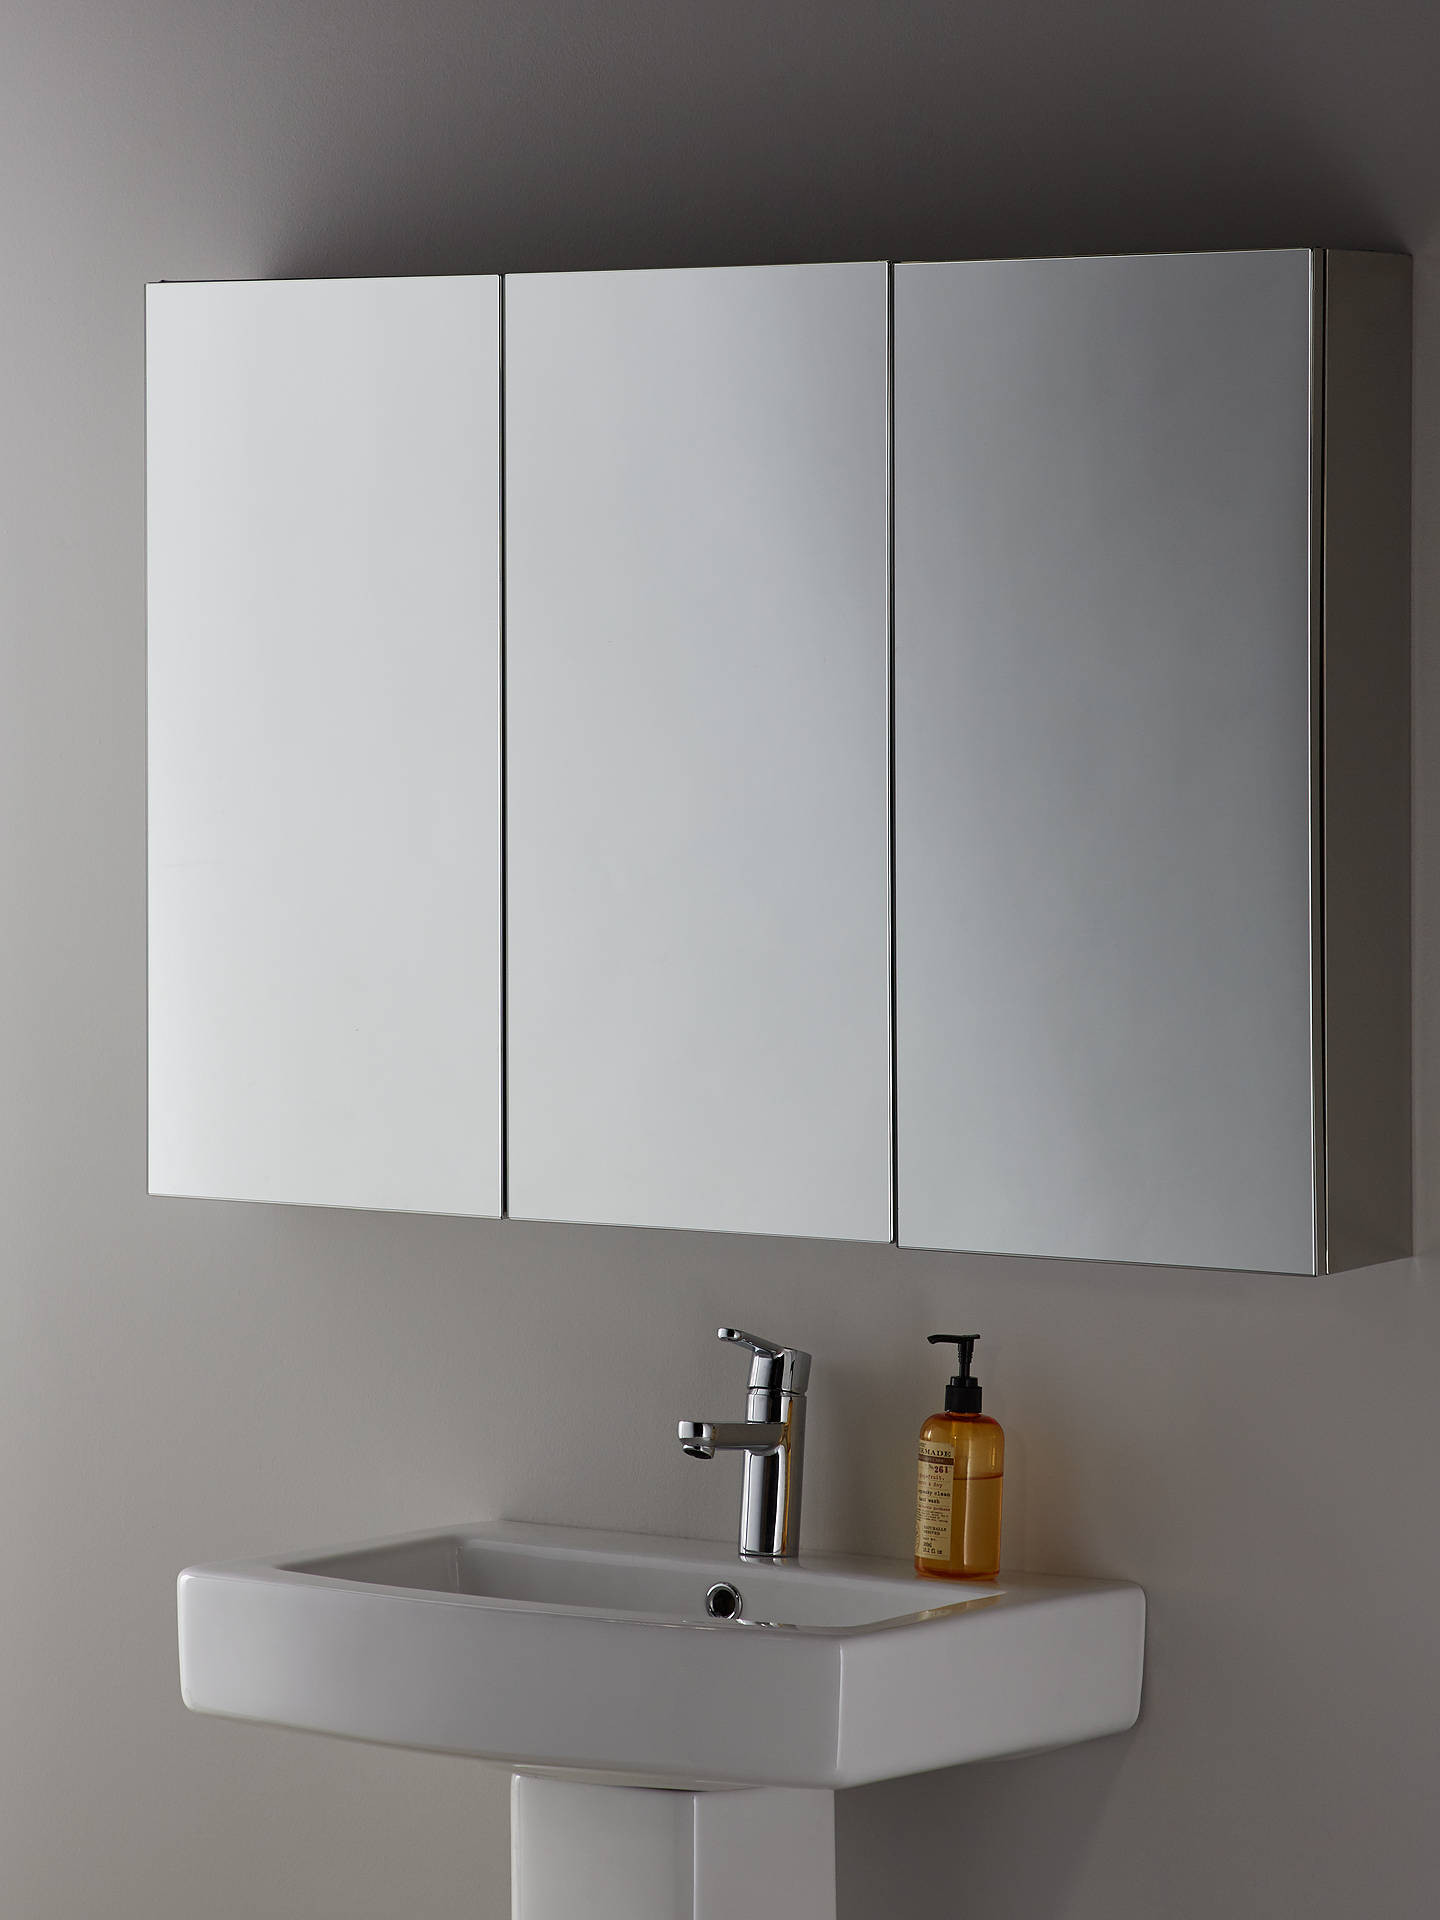 Bathroom Cabinet Mirror
 John Lewis & Partners Triple Mirrored Bathroom Cabinet